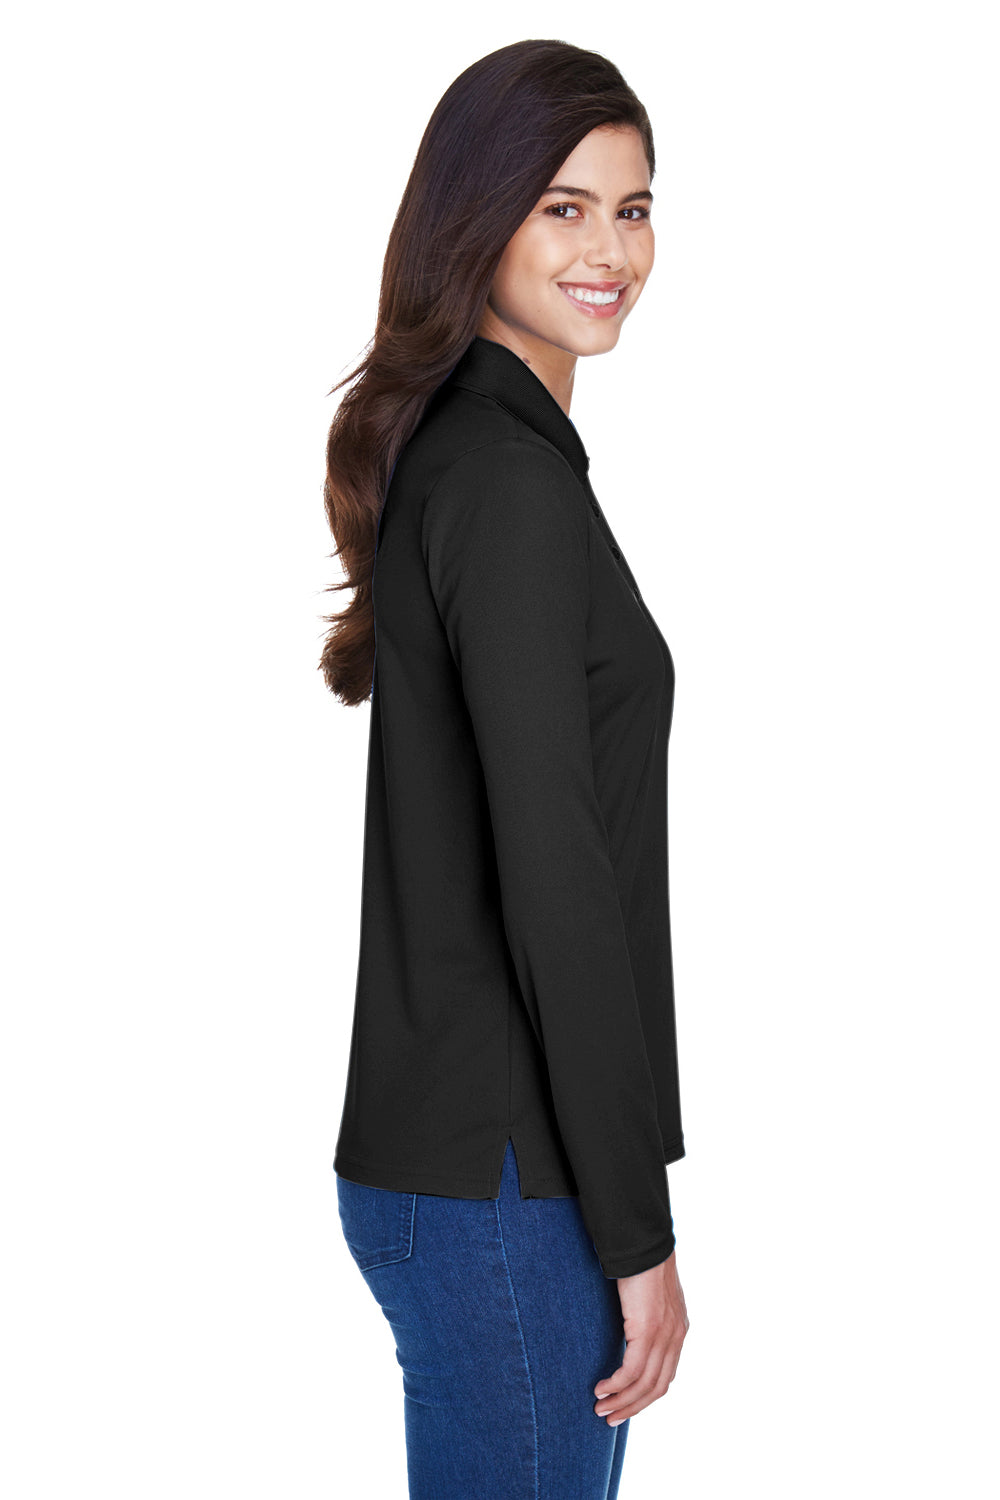 Core 365 78192 Womens Pinnacle Performance Moisture Wicking Long Sleeve Polo Shirt Black Side